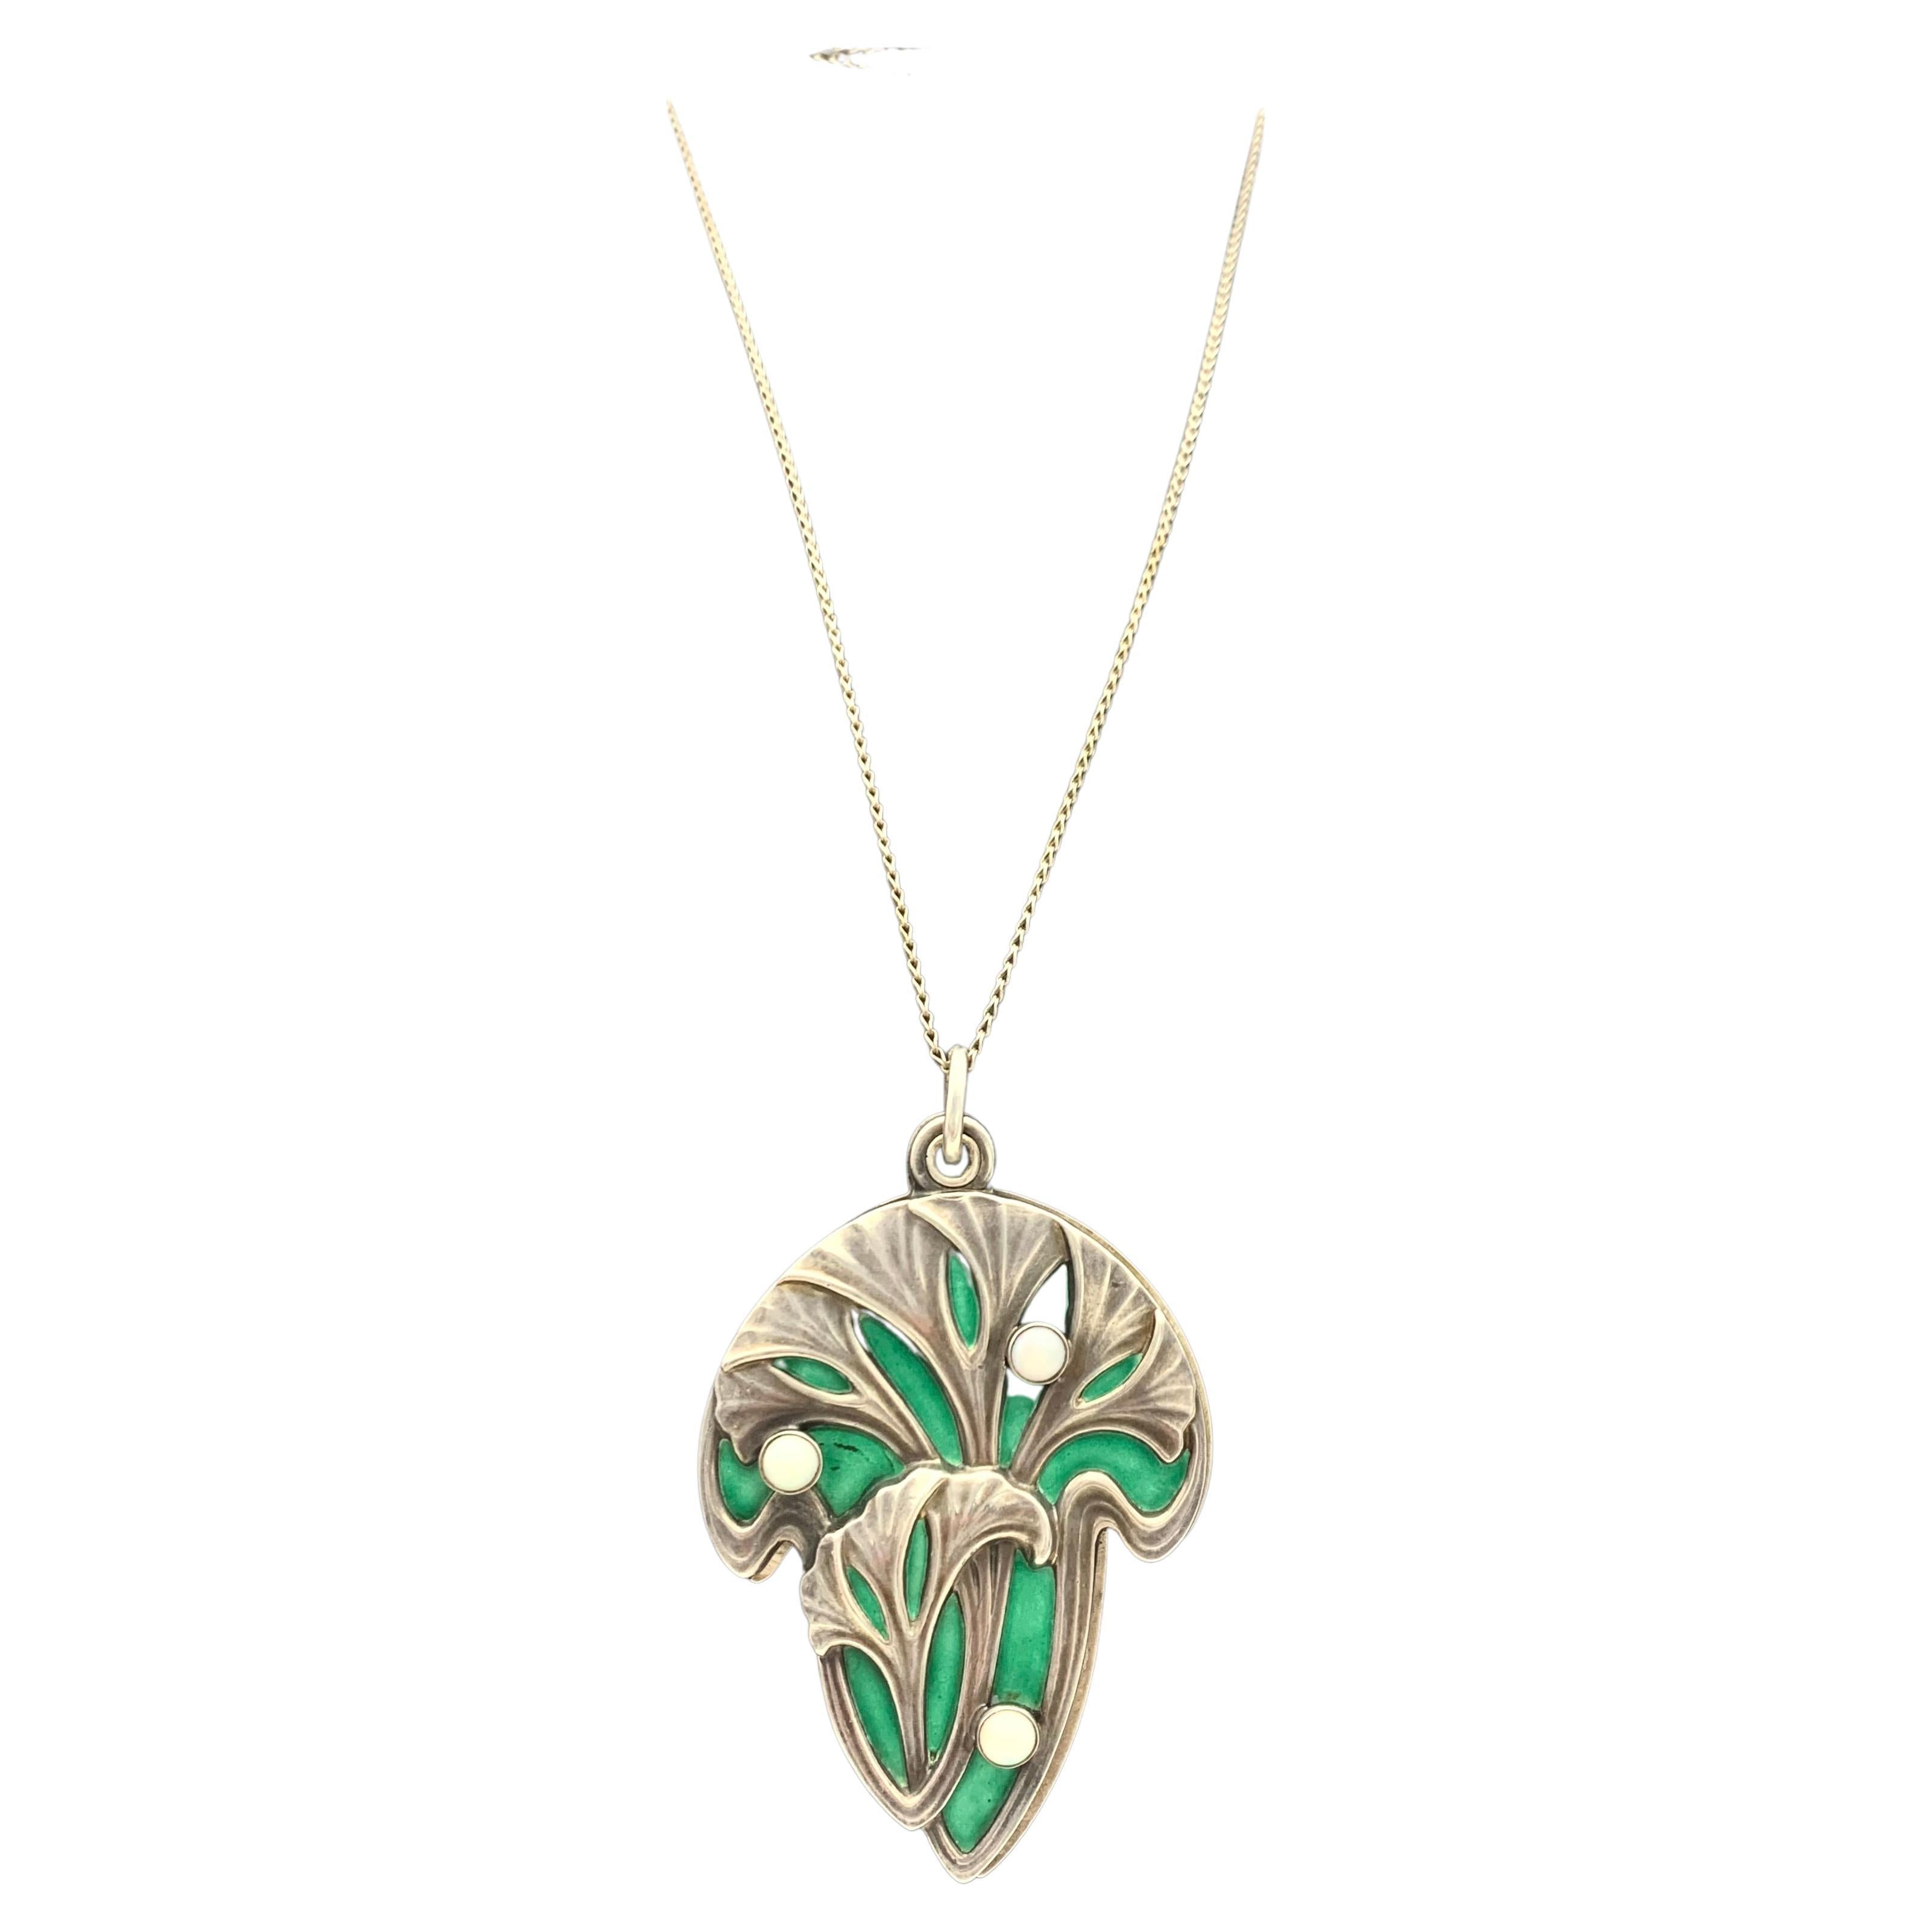 Antique Art Nouveau Pendant Necklace Gingko Leaves Opal Green Enamel Silver For Sale